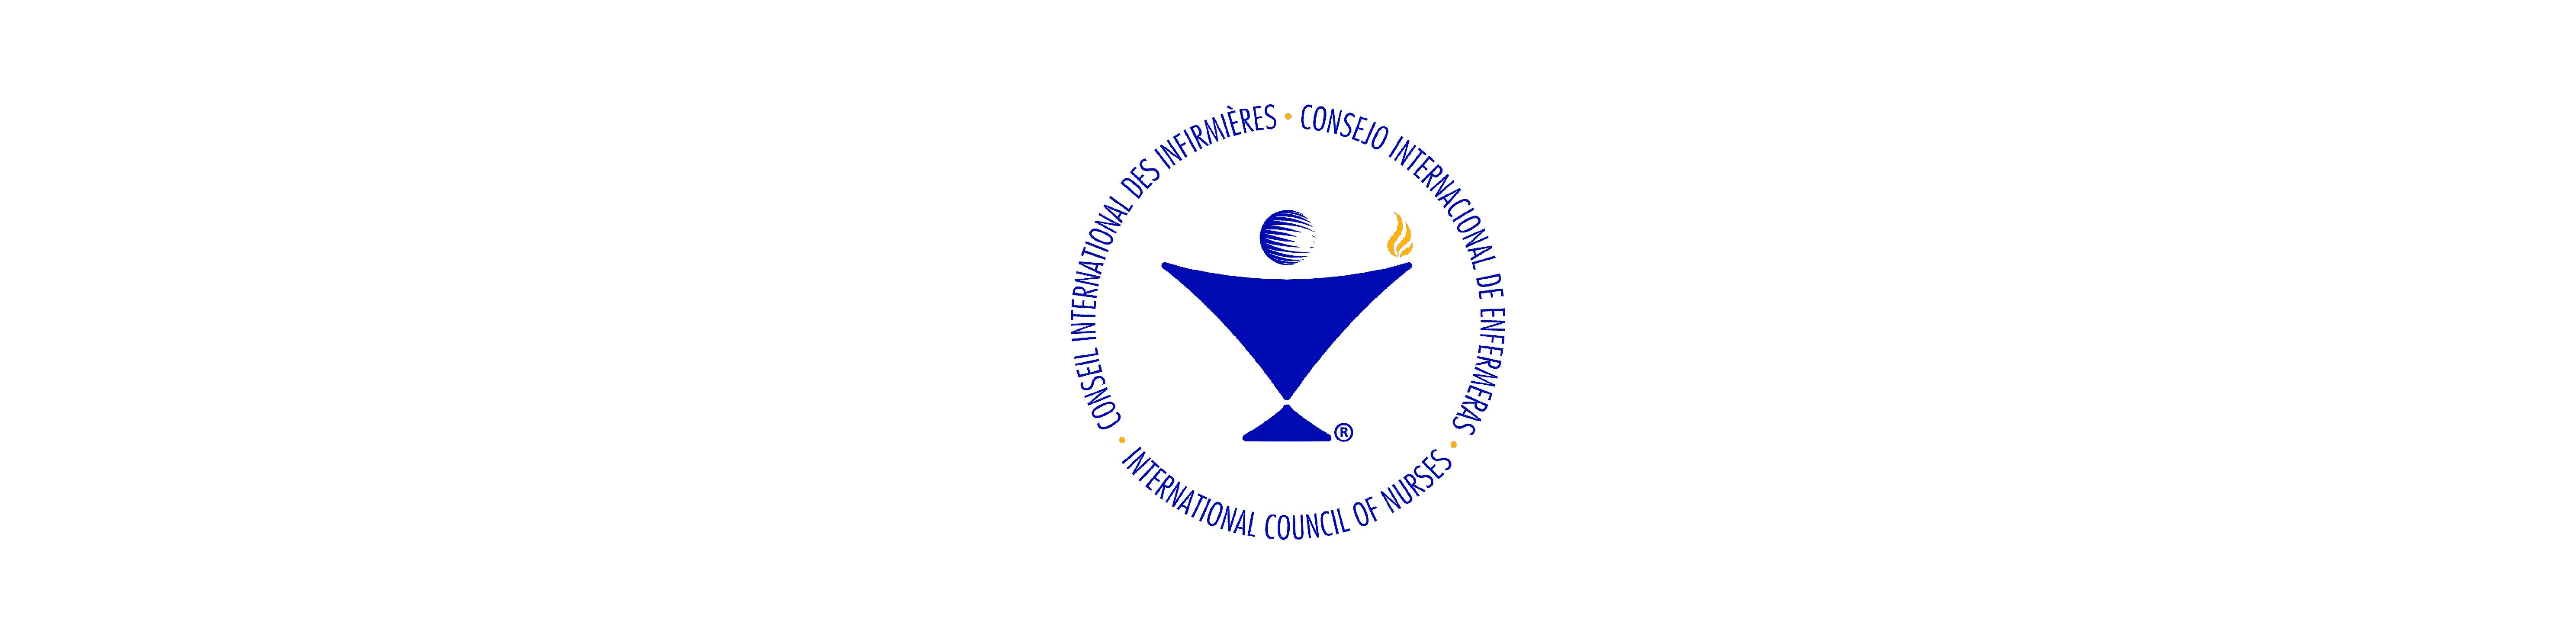 ICN Logo - Canadian Nurses Association To Co Host International Council